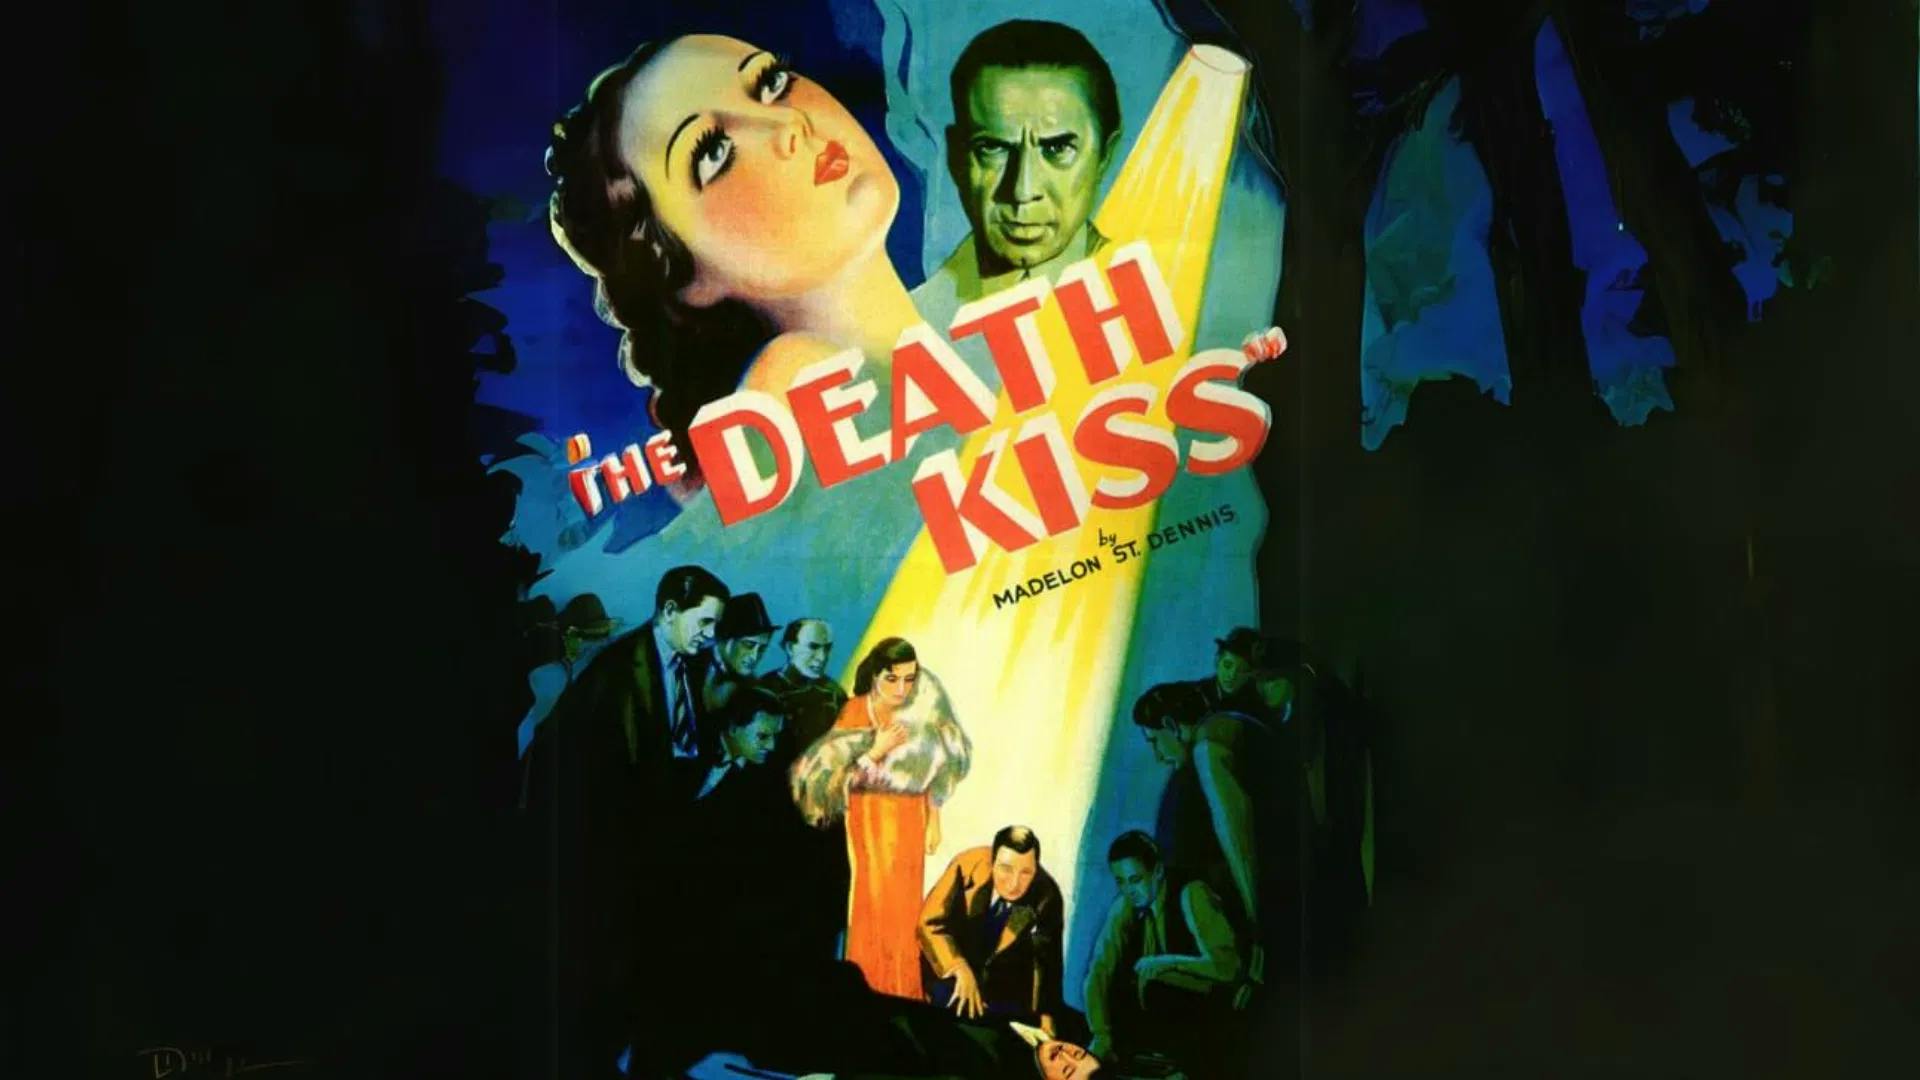 The Death Kiss